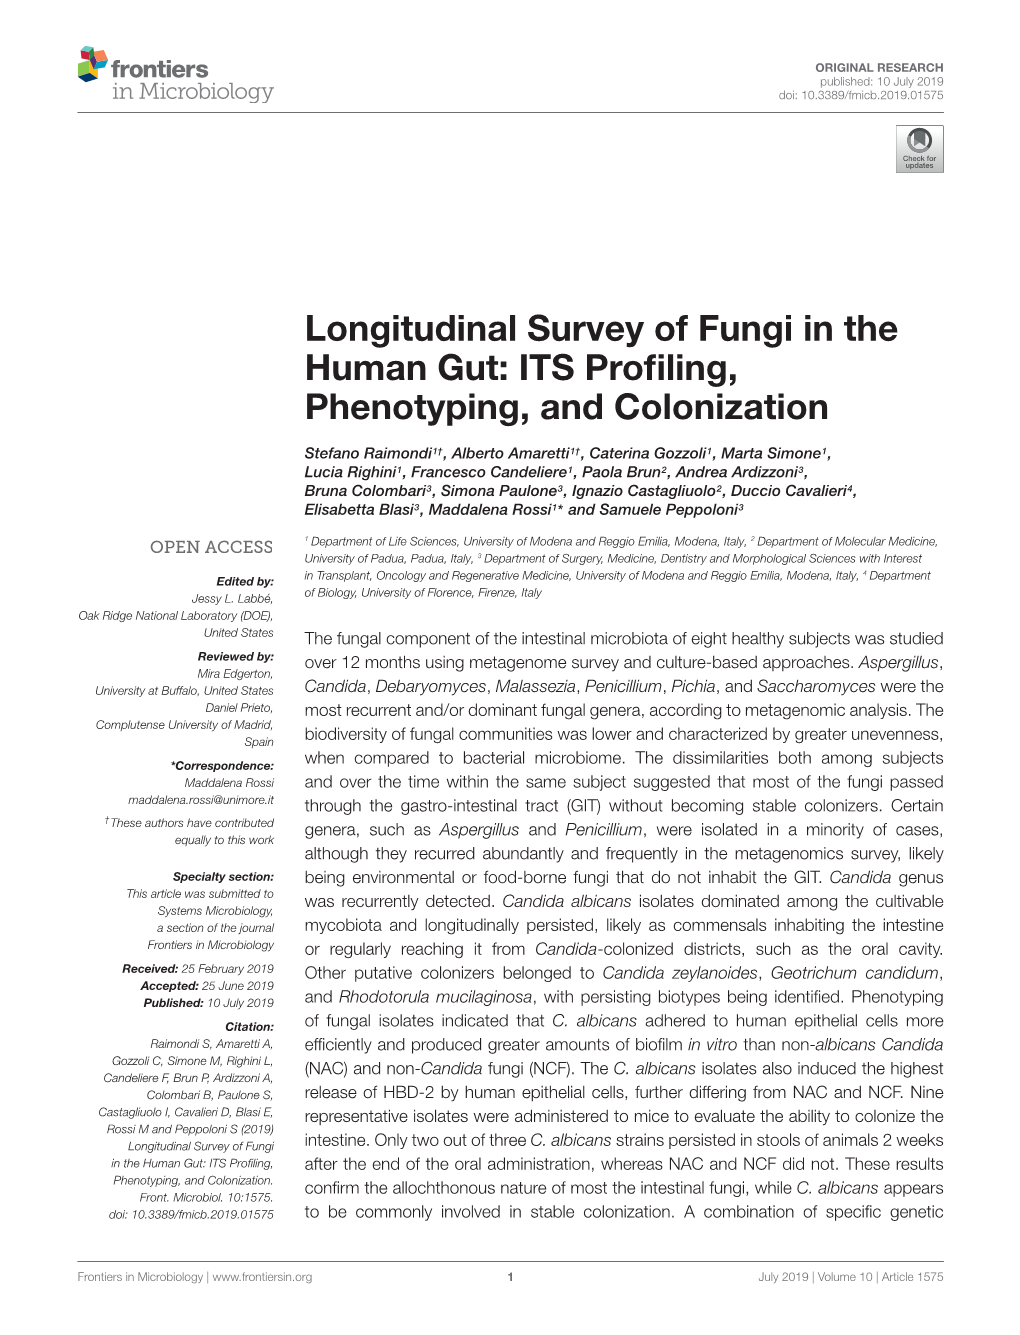 Longitudinal Survey of Fungi in the Human Gut: ITS Profiling ...